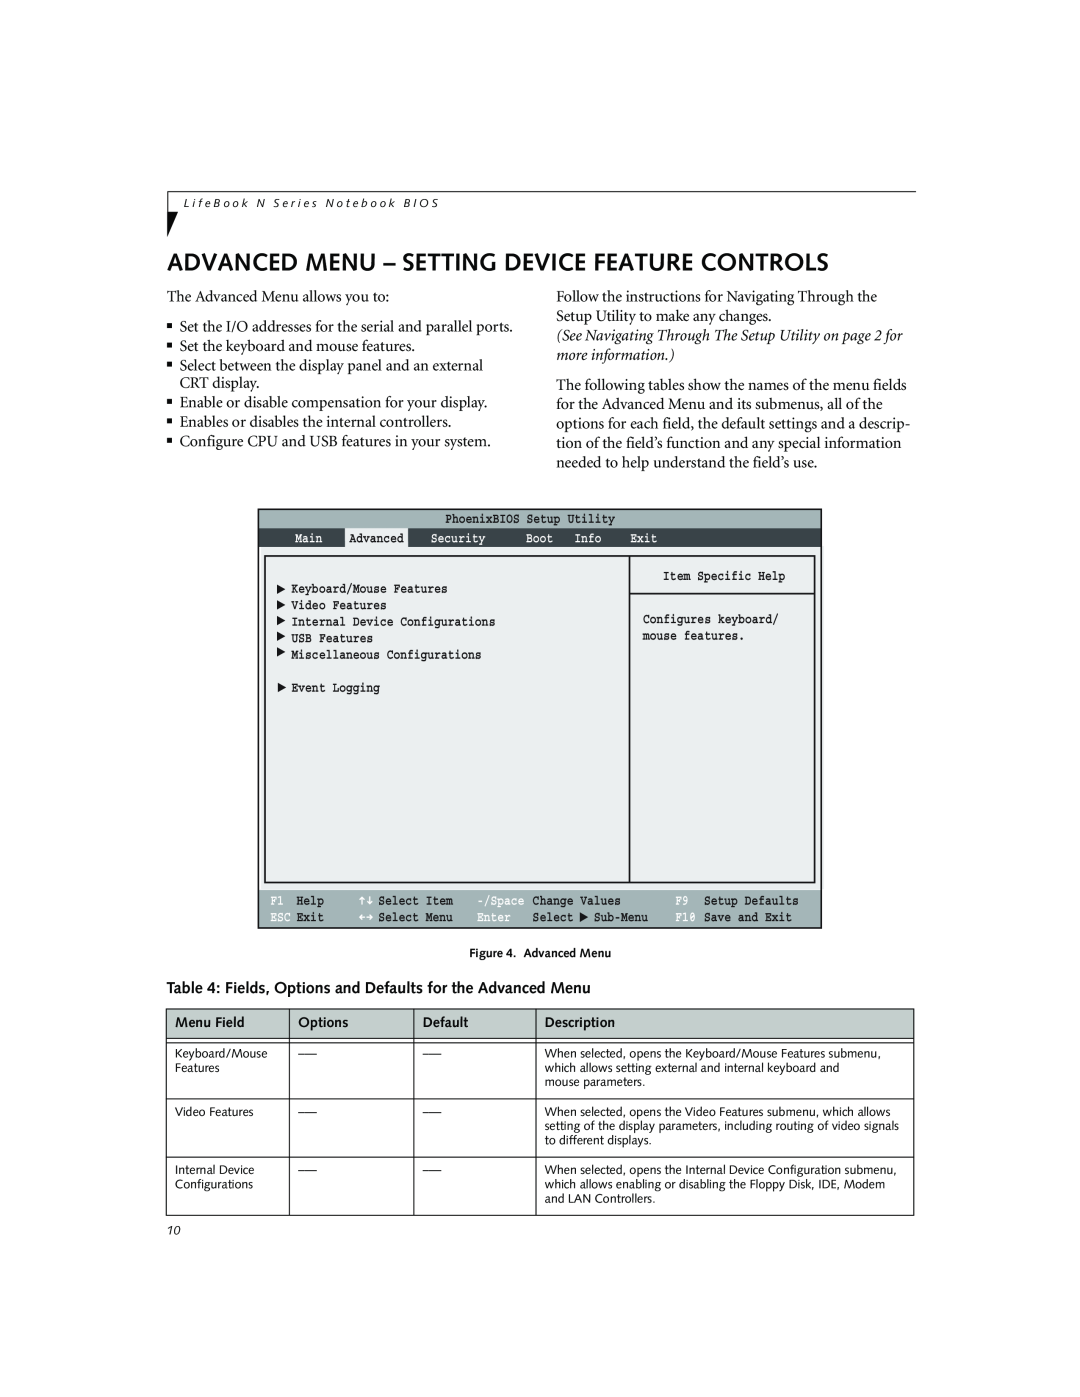 Fujitsu Siemens Computers N3010 manual Advanced Menu - Setting Device Feature Controls 